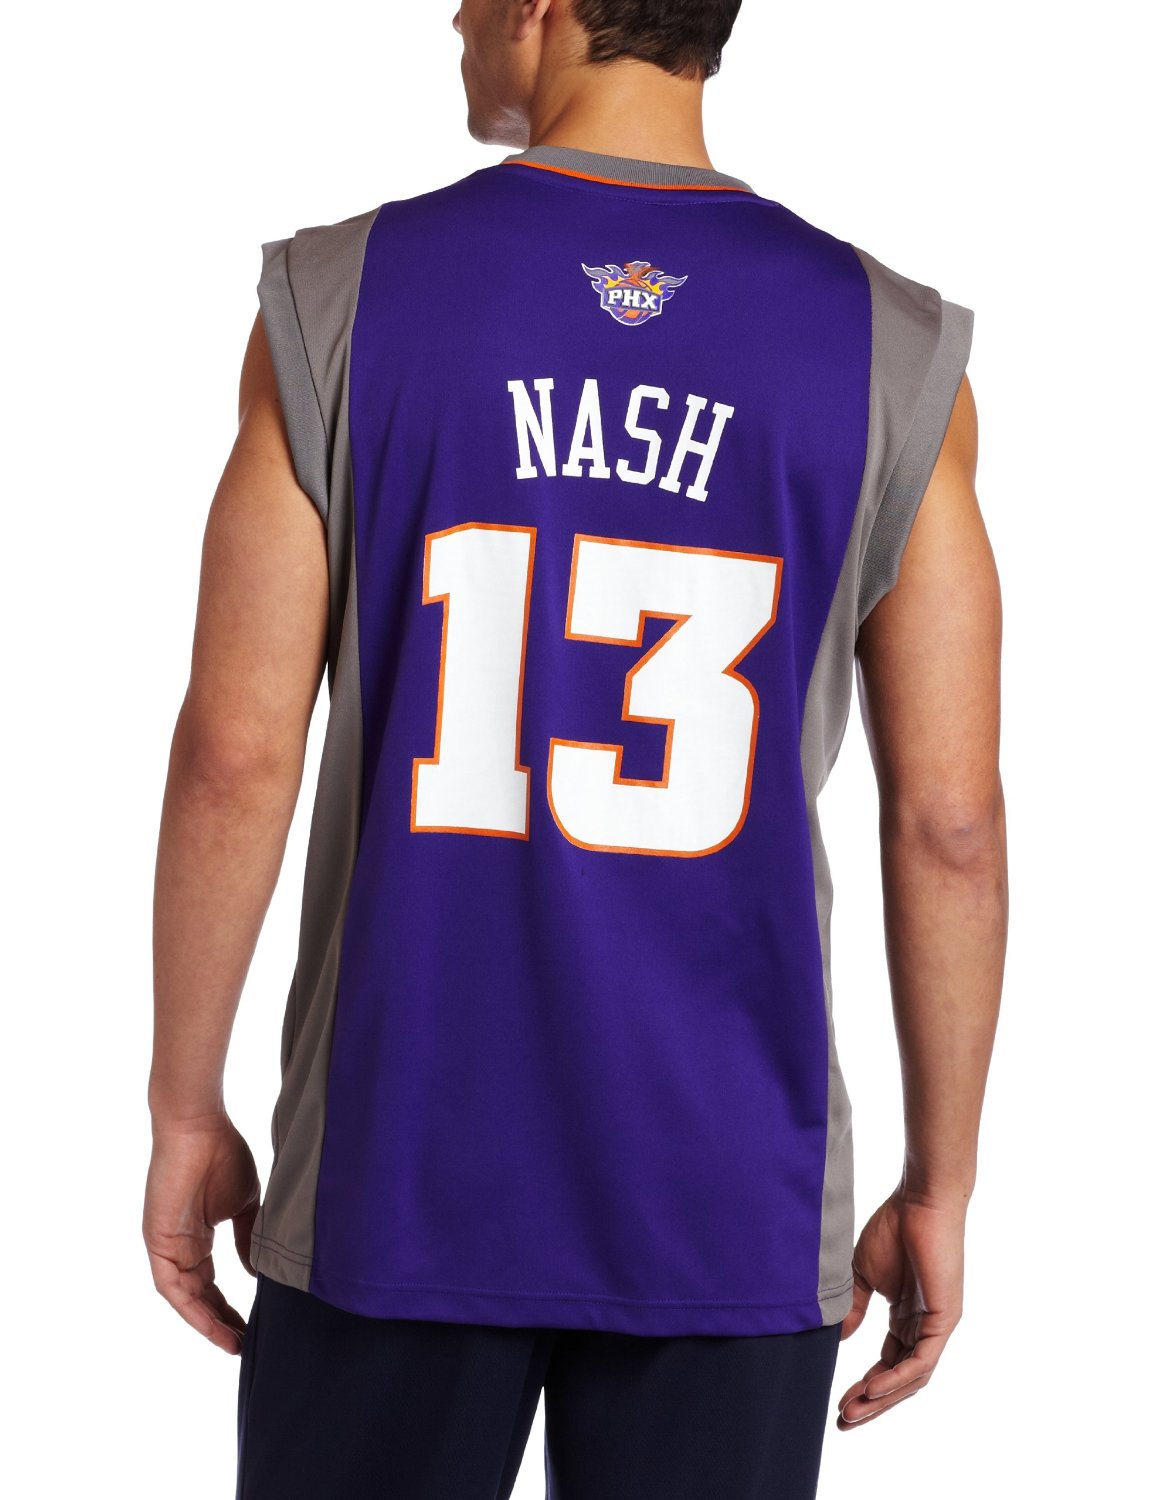 Phoenix Suns Steve Nash Purple Jersey | NBA Fans Shop1154 x 1500